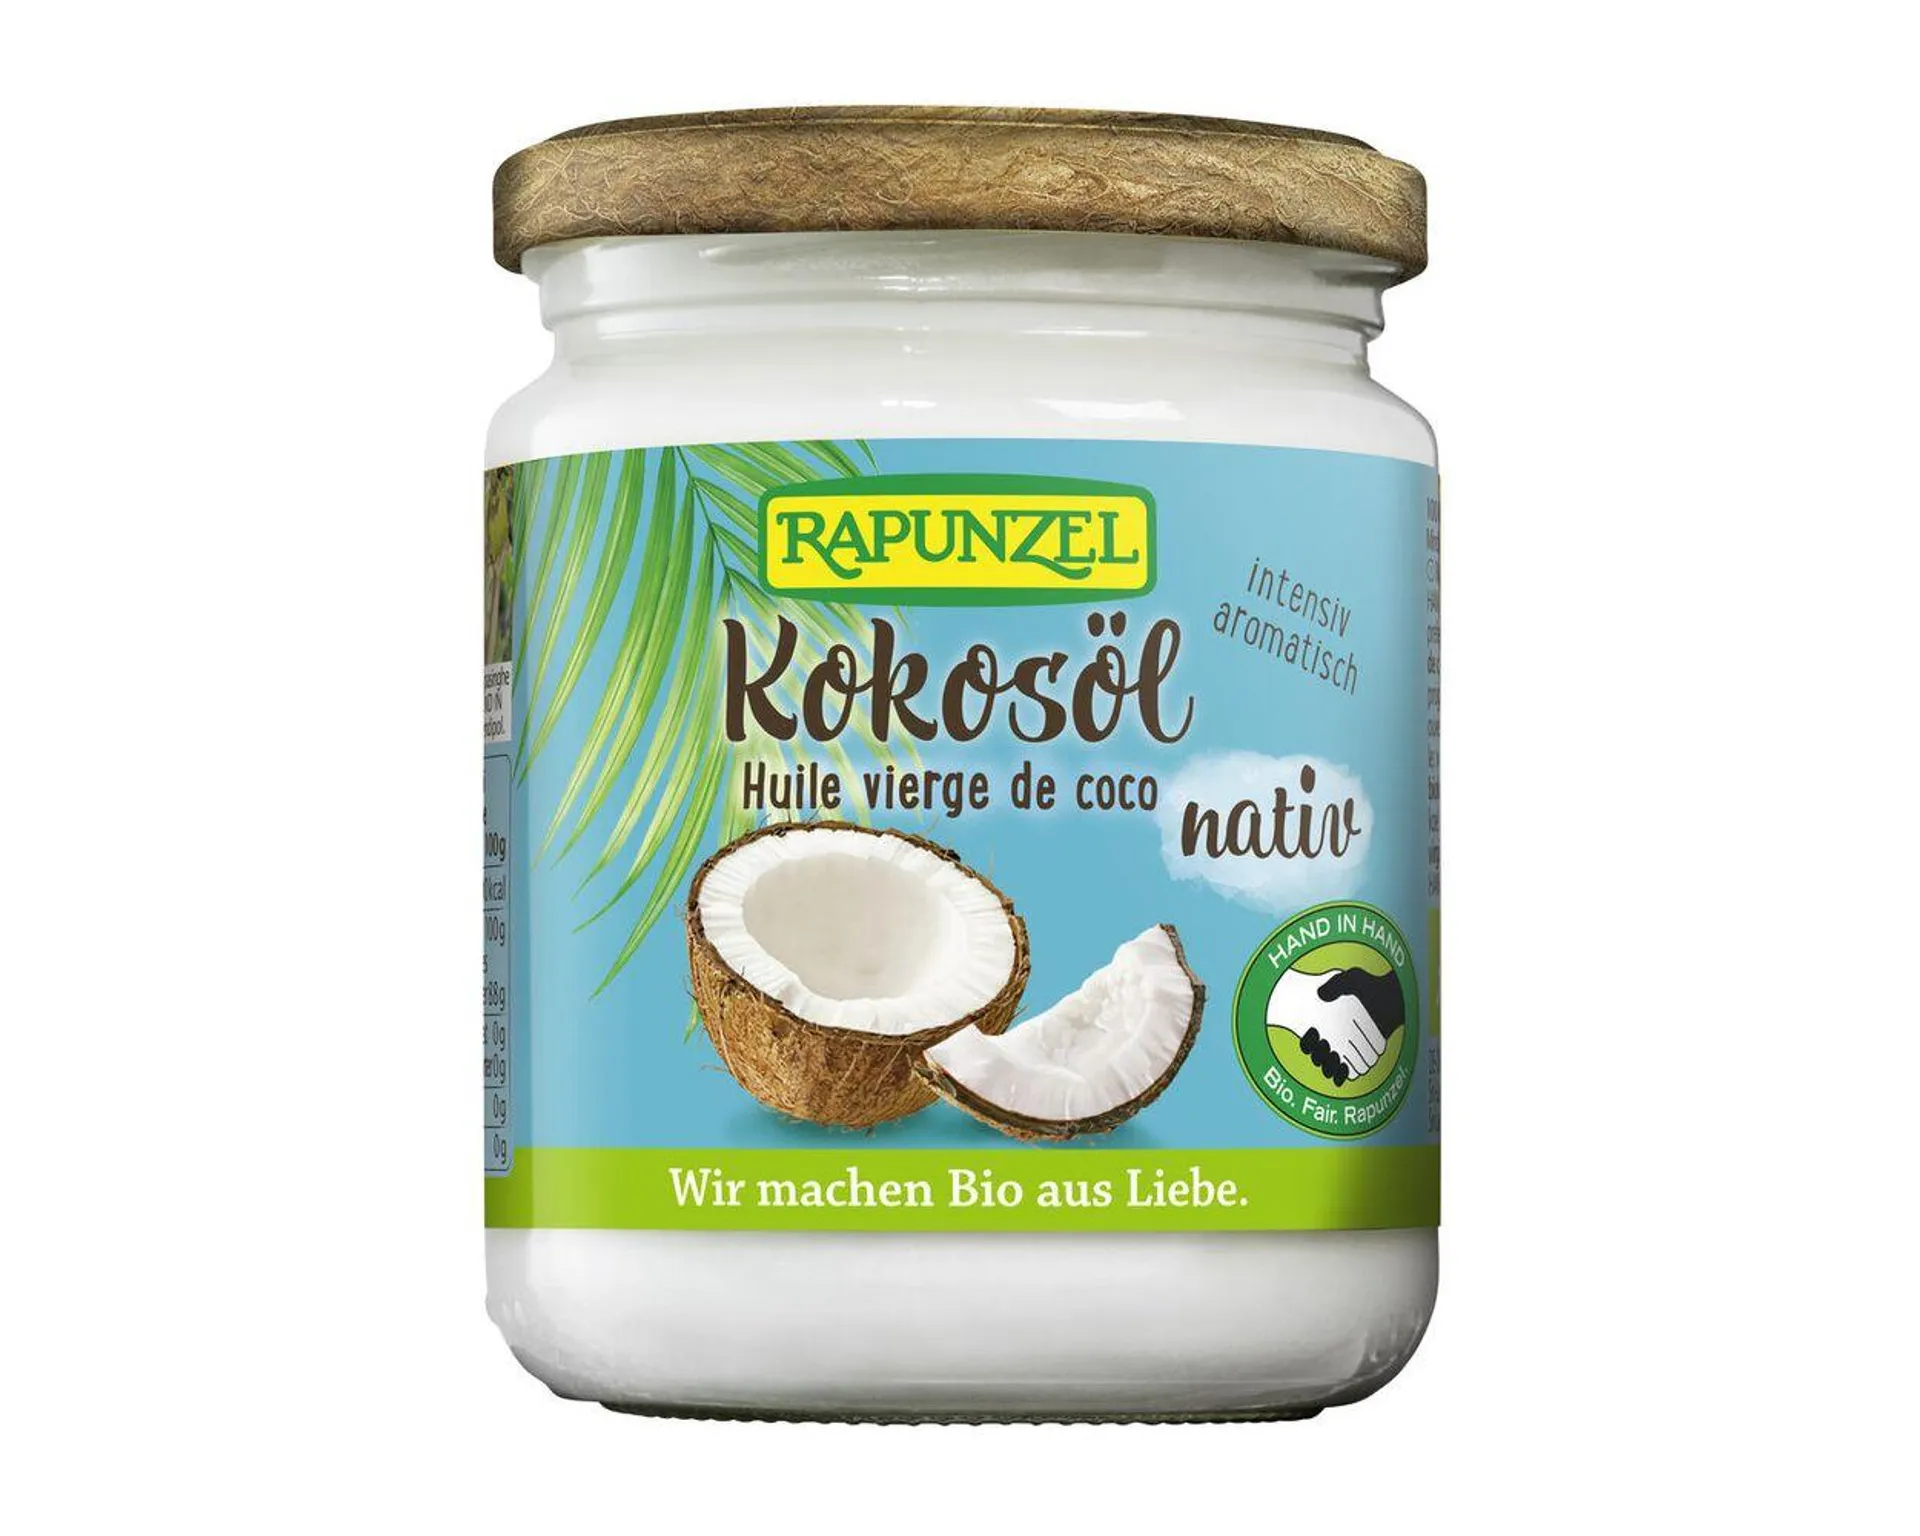 Rapunzel Kokosöl nativ HIH